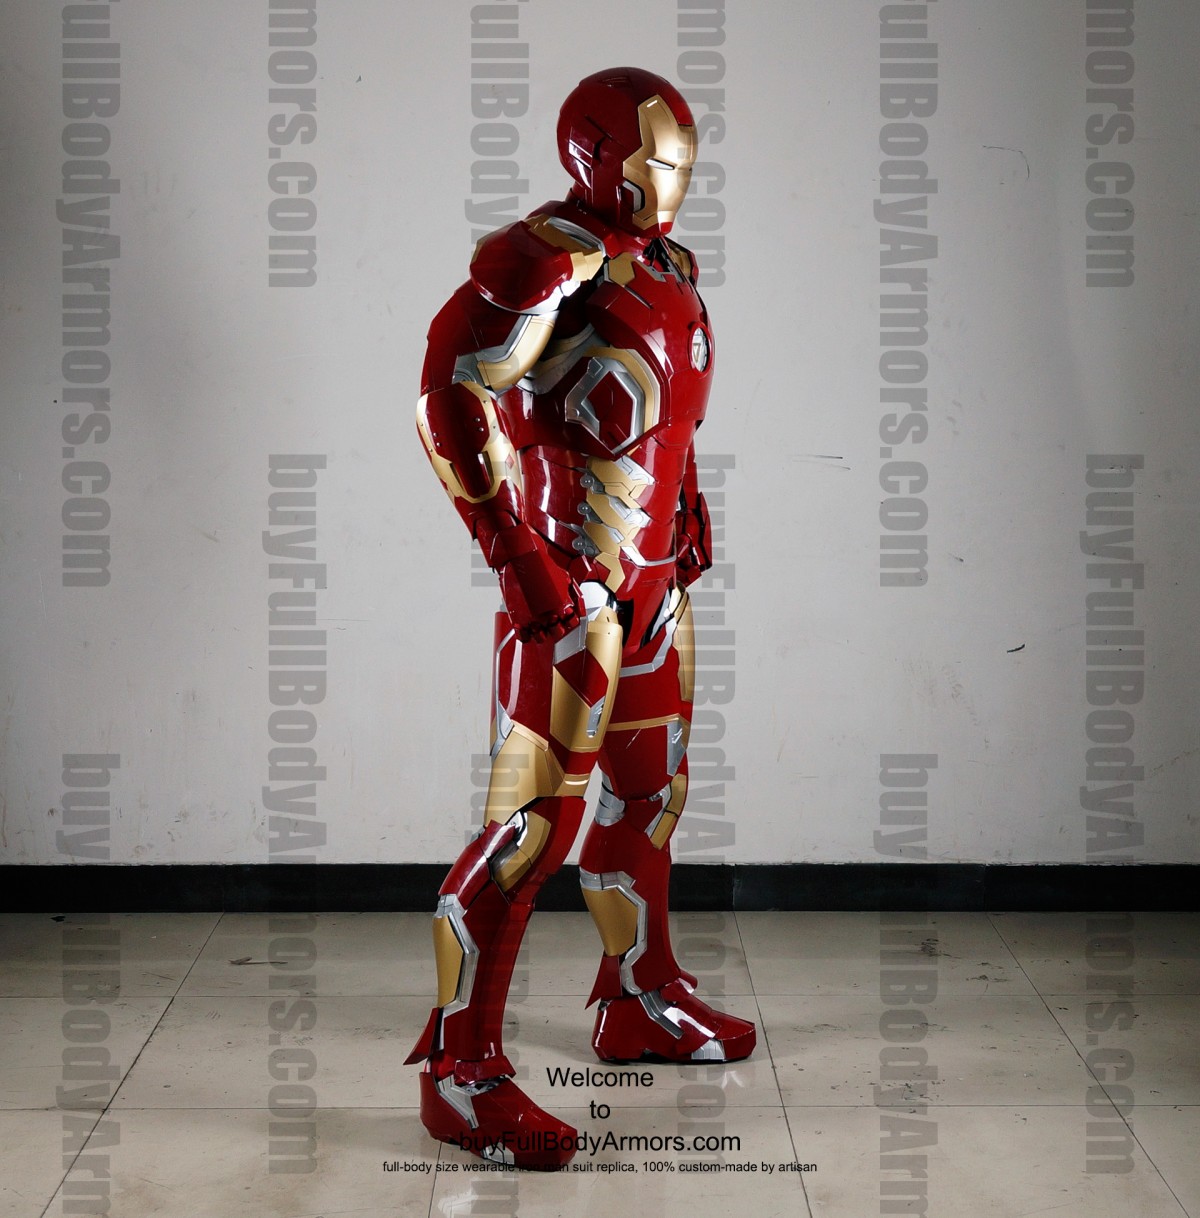 Buy Iron Man suit, Halo Master Chief armor, Batman costume, Star ...